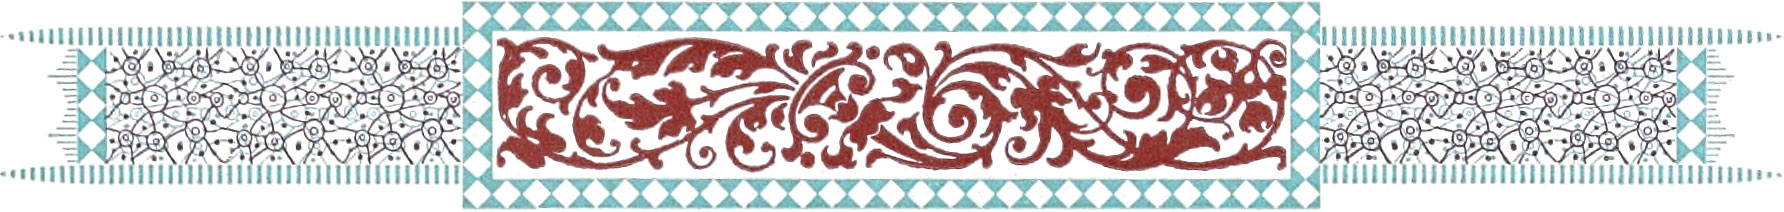 Ornate border comprising reddish-brown and light teal colors